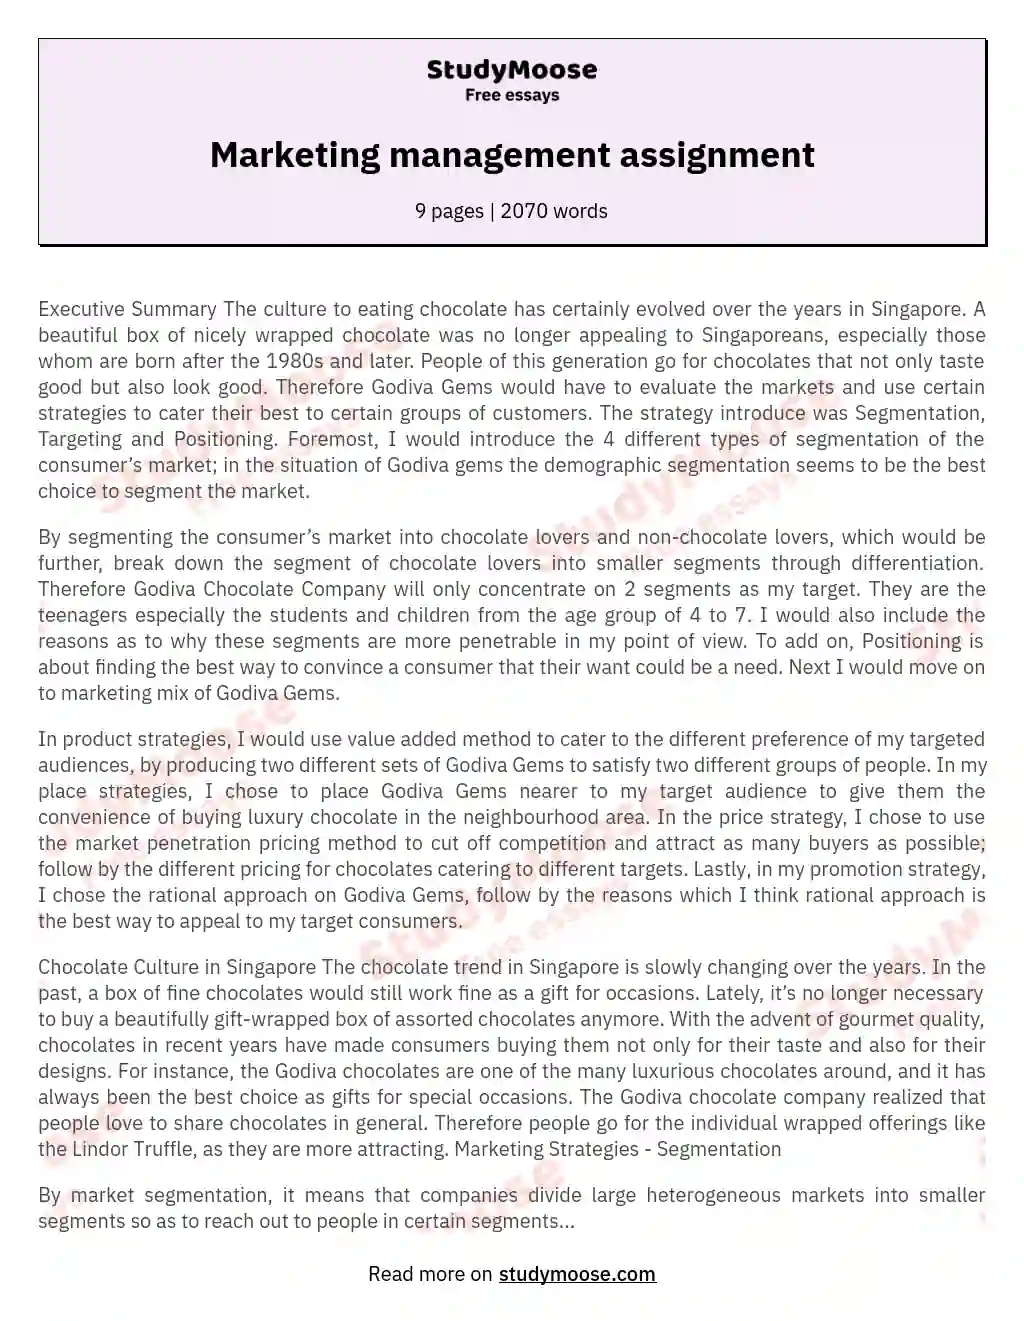 Marketing management assignment essay